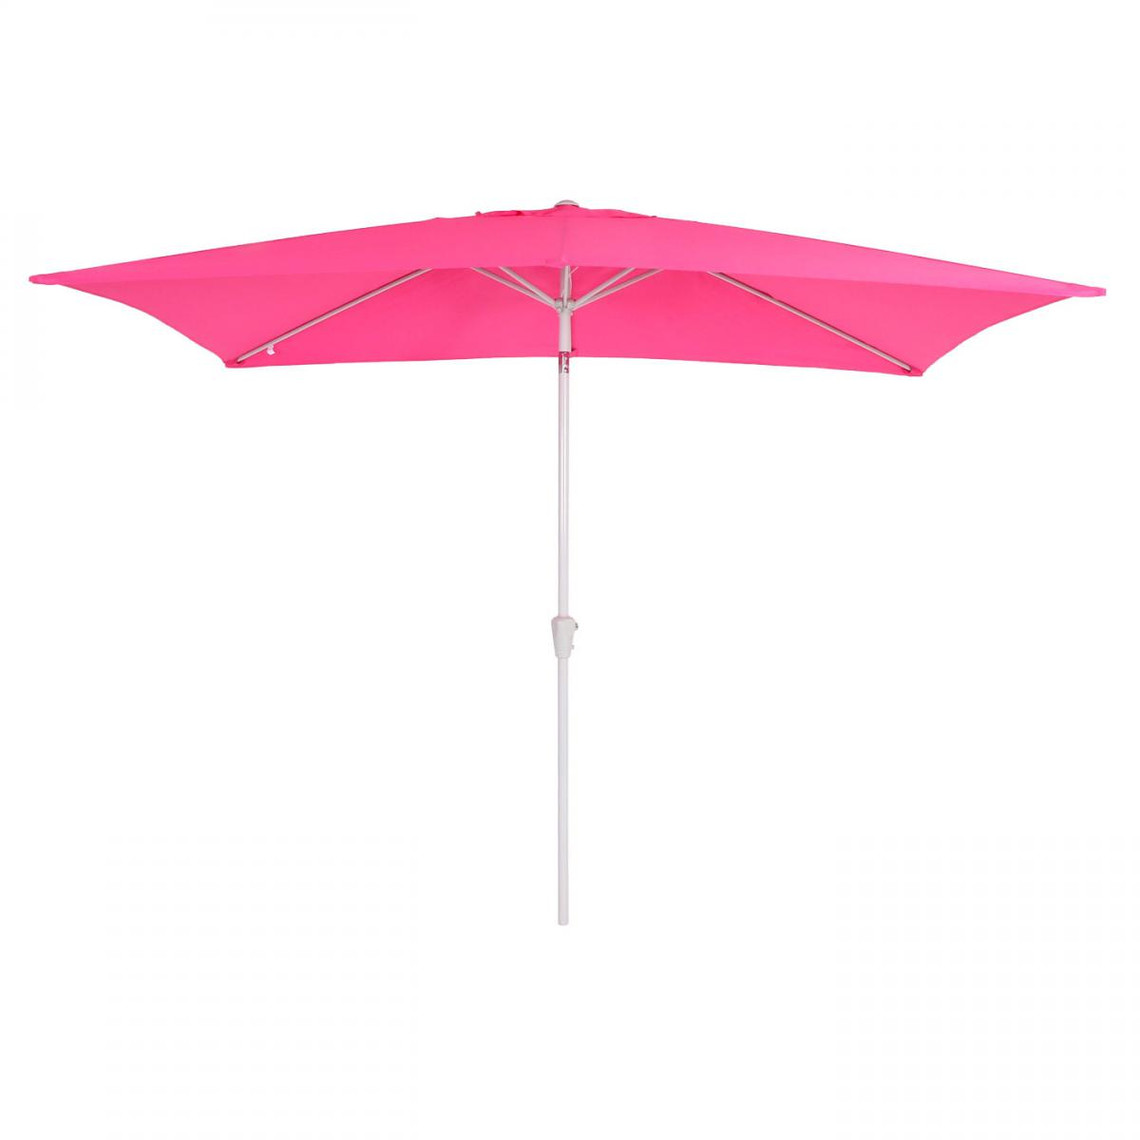 Rose Parasol de Jardin N23,Parasol,2x3m Rectangulaire Inclinable,Polyester/Alu 